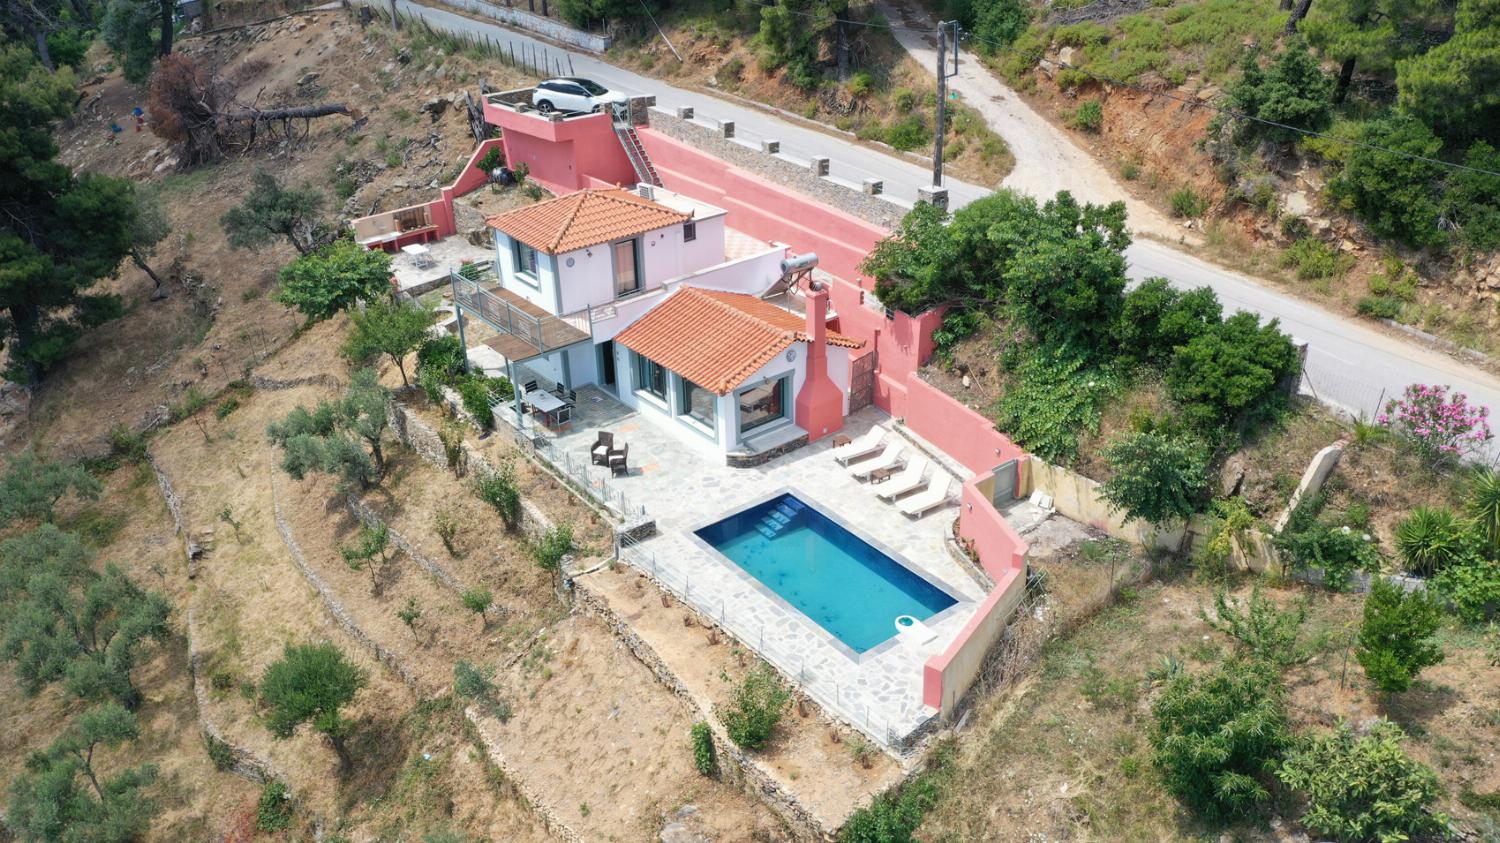 Aerial view showing location of Villa Margarita